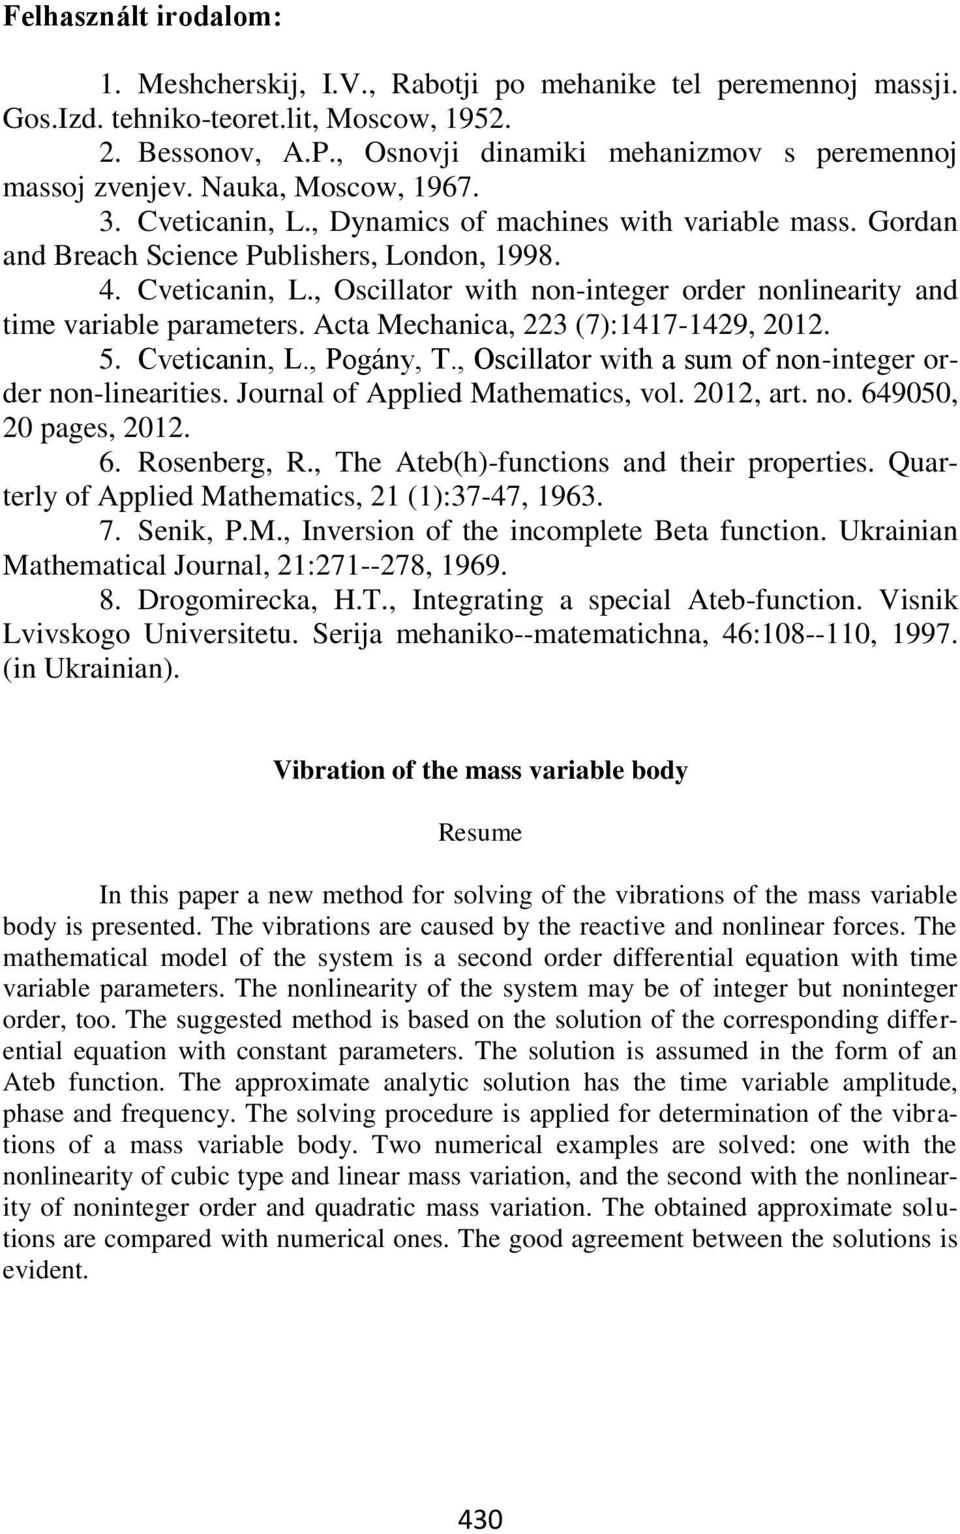 Acta Mechanica 3 7:47-49. 5. Cveticanin L. Pogány T. Oscillator with a su of non-integer orer non-linearities. Journal of Applie Matheatics vol. art. no. 6495 pages. 6. Rosenberg R.